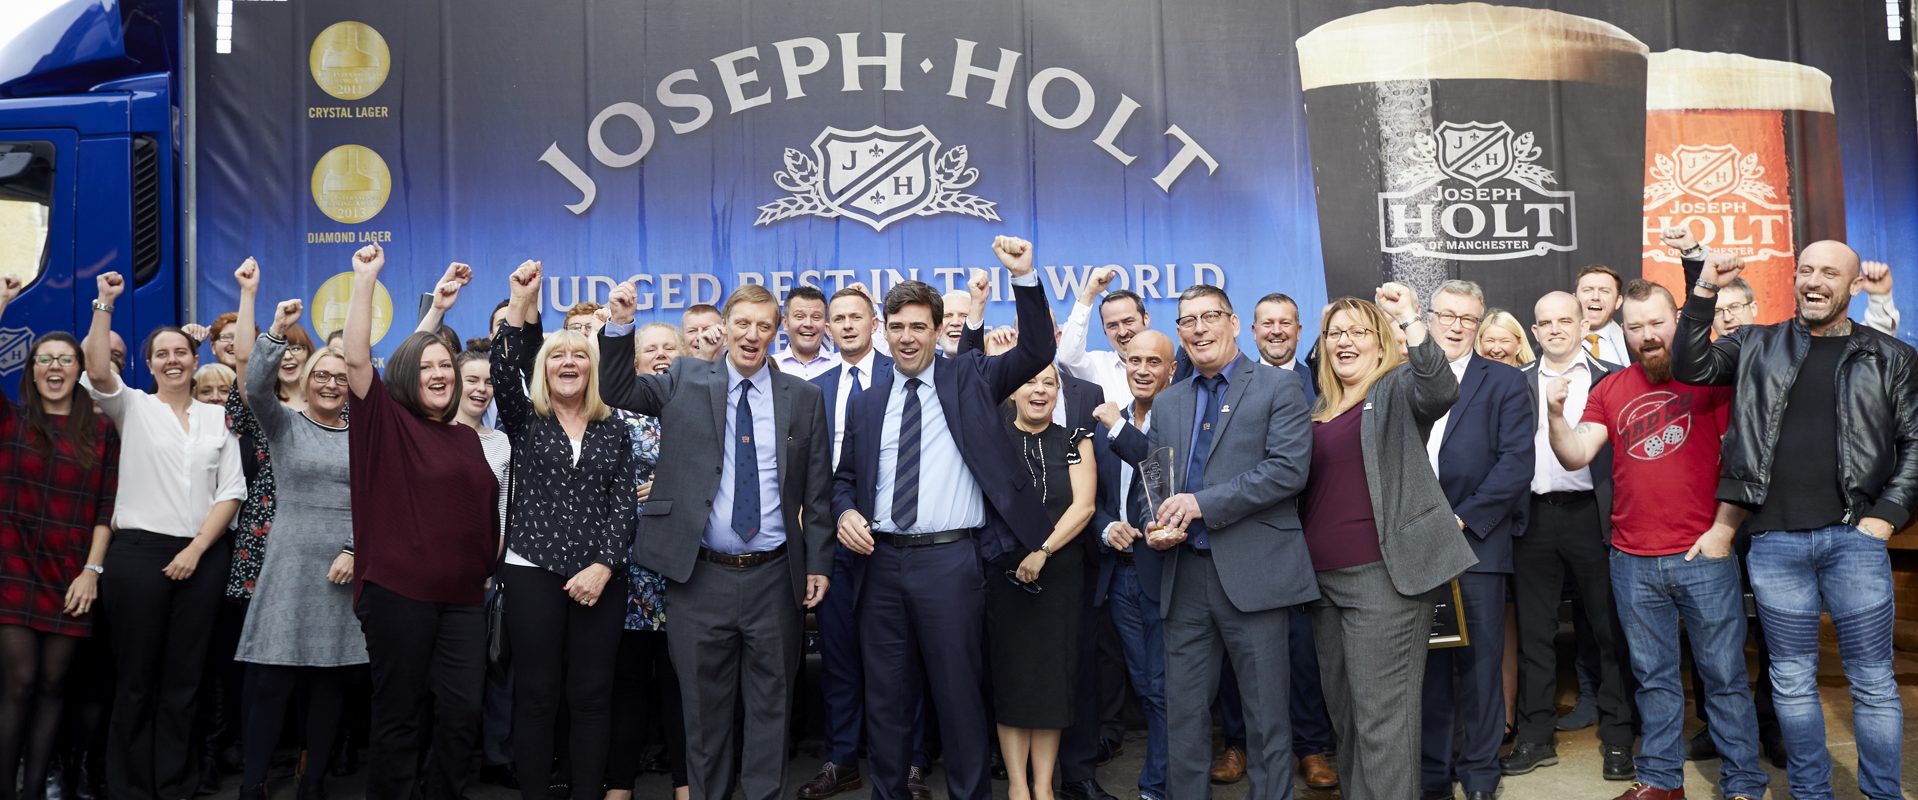 Joseph Holt Charity 2019